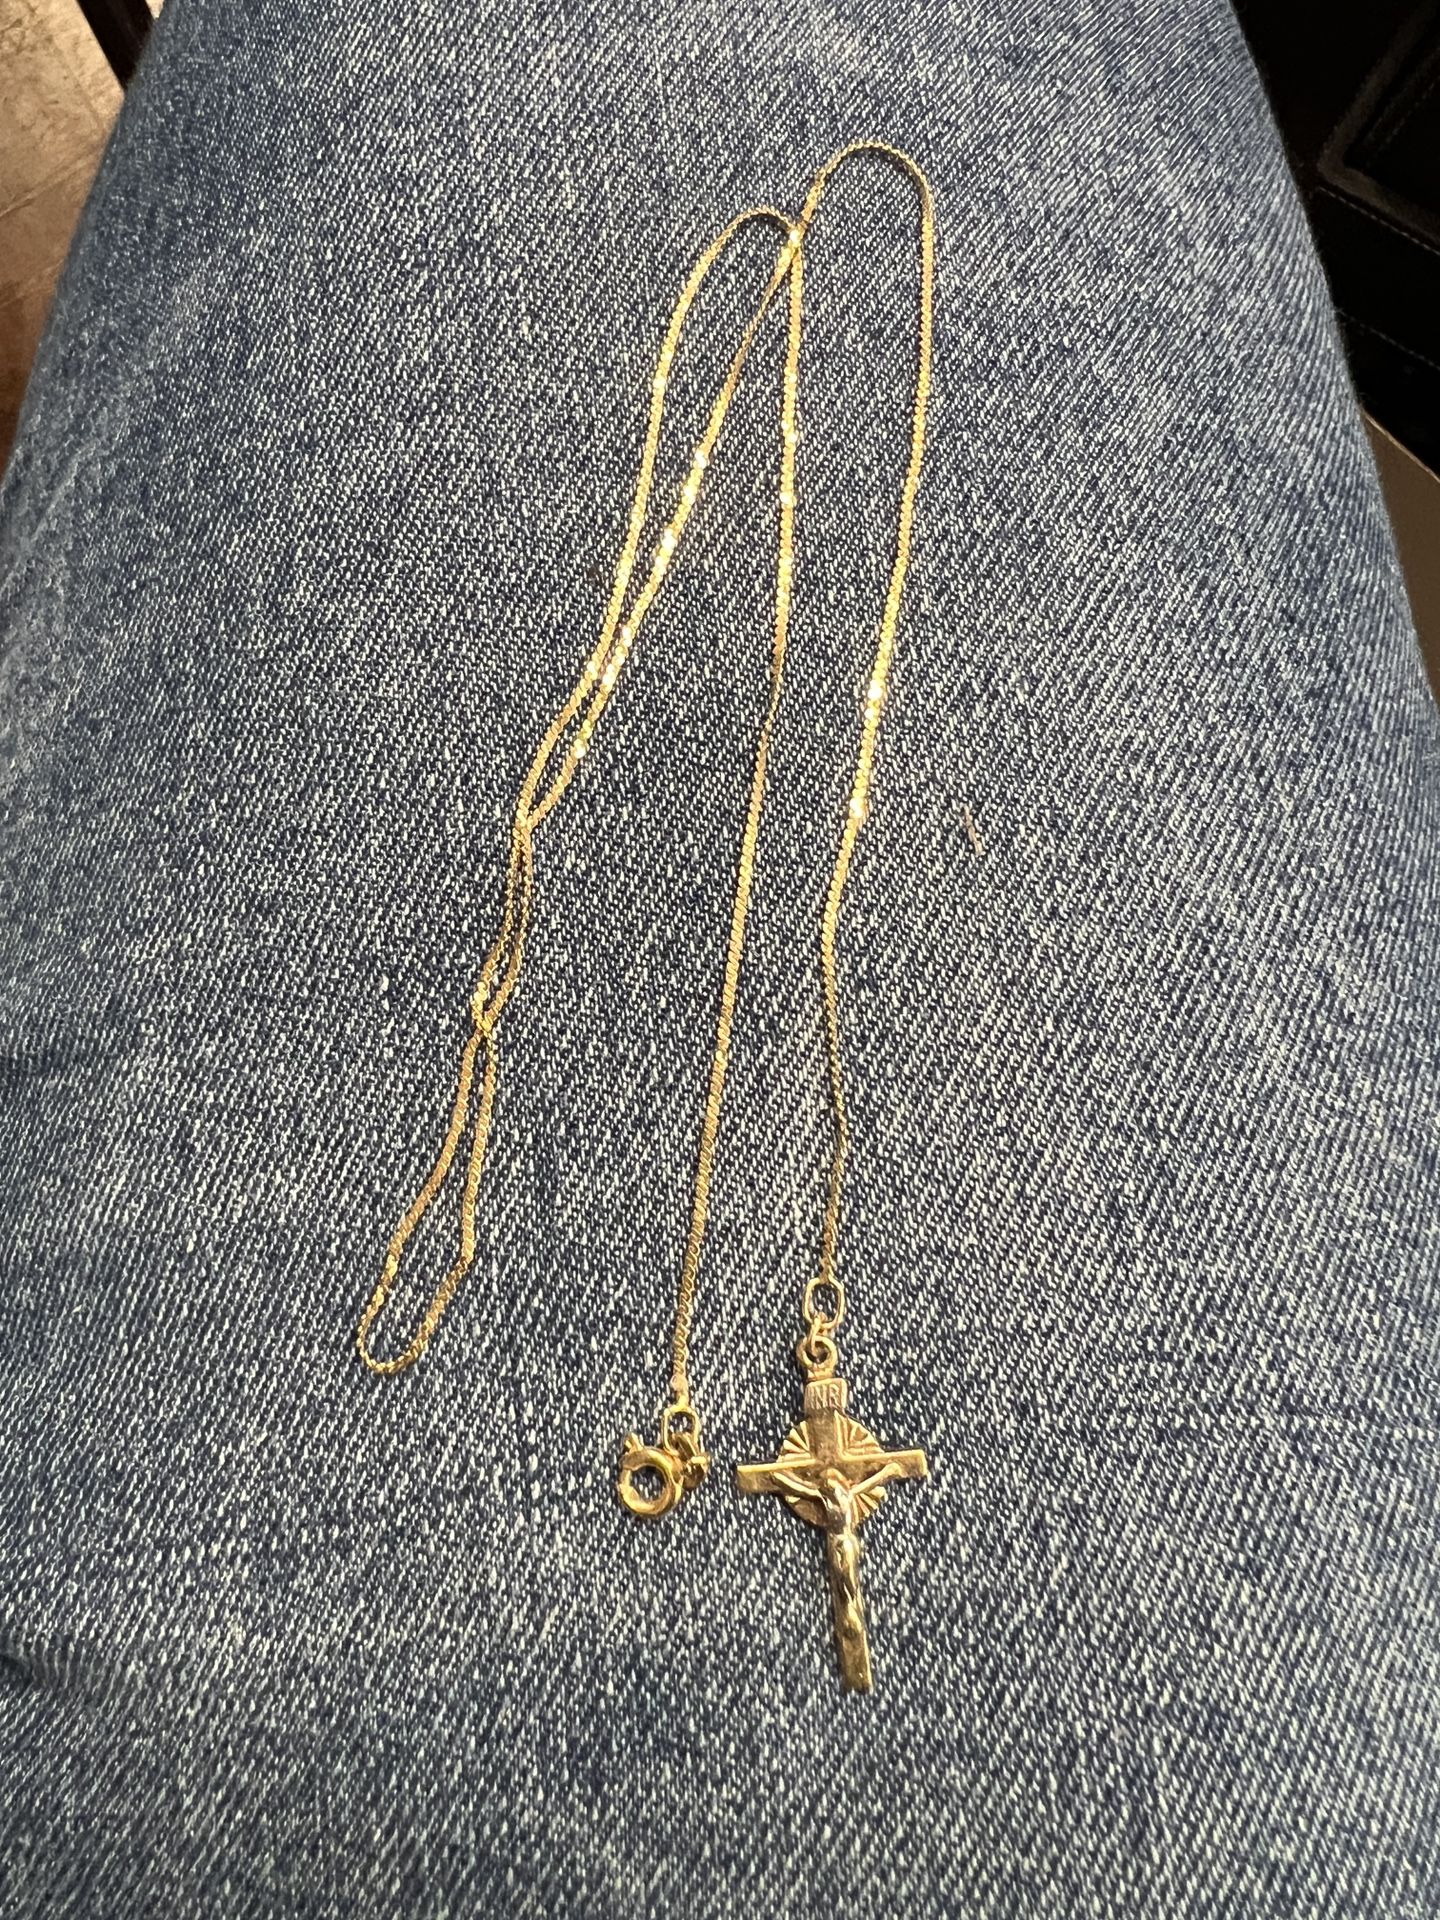 14K Yellow Gold Lord Jesus Christ Crucifix Cross Necklace Charm Pendant 2.3g